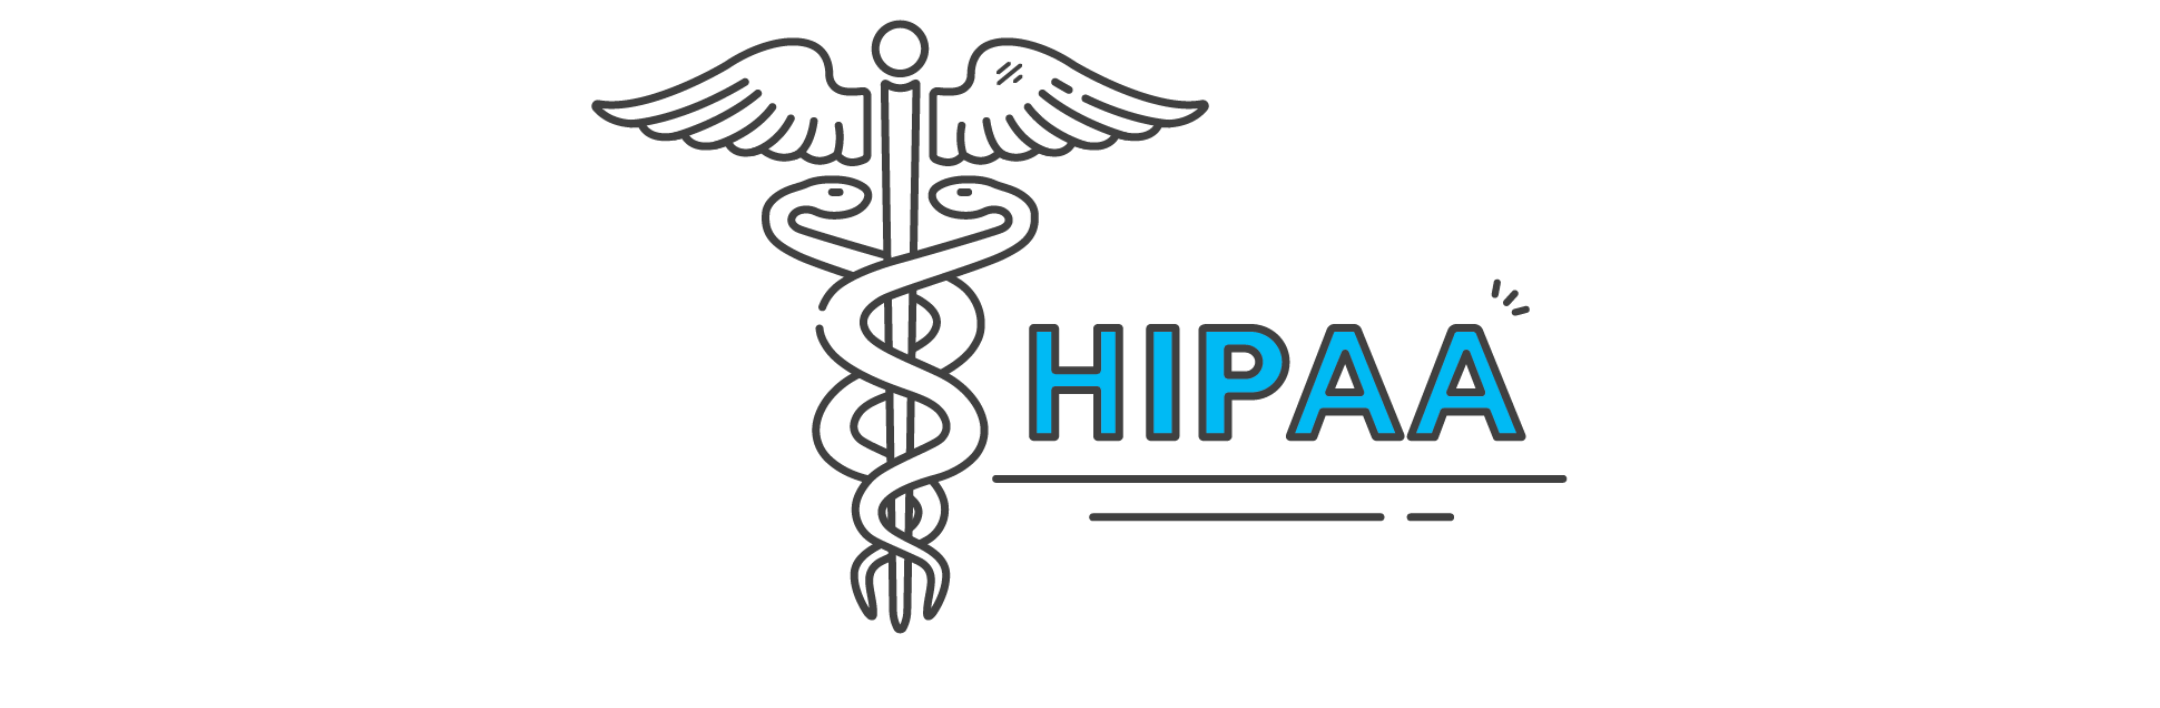 HIPPA logo image